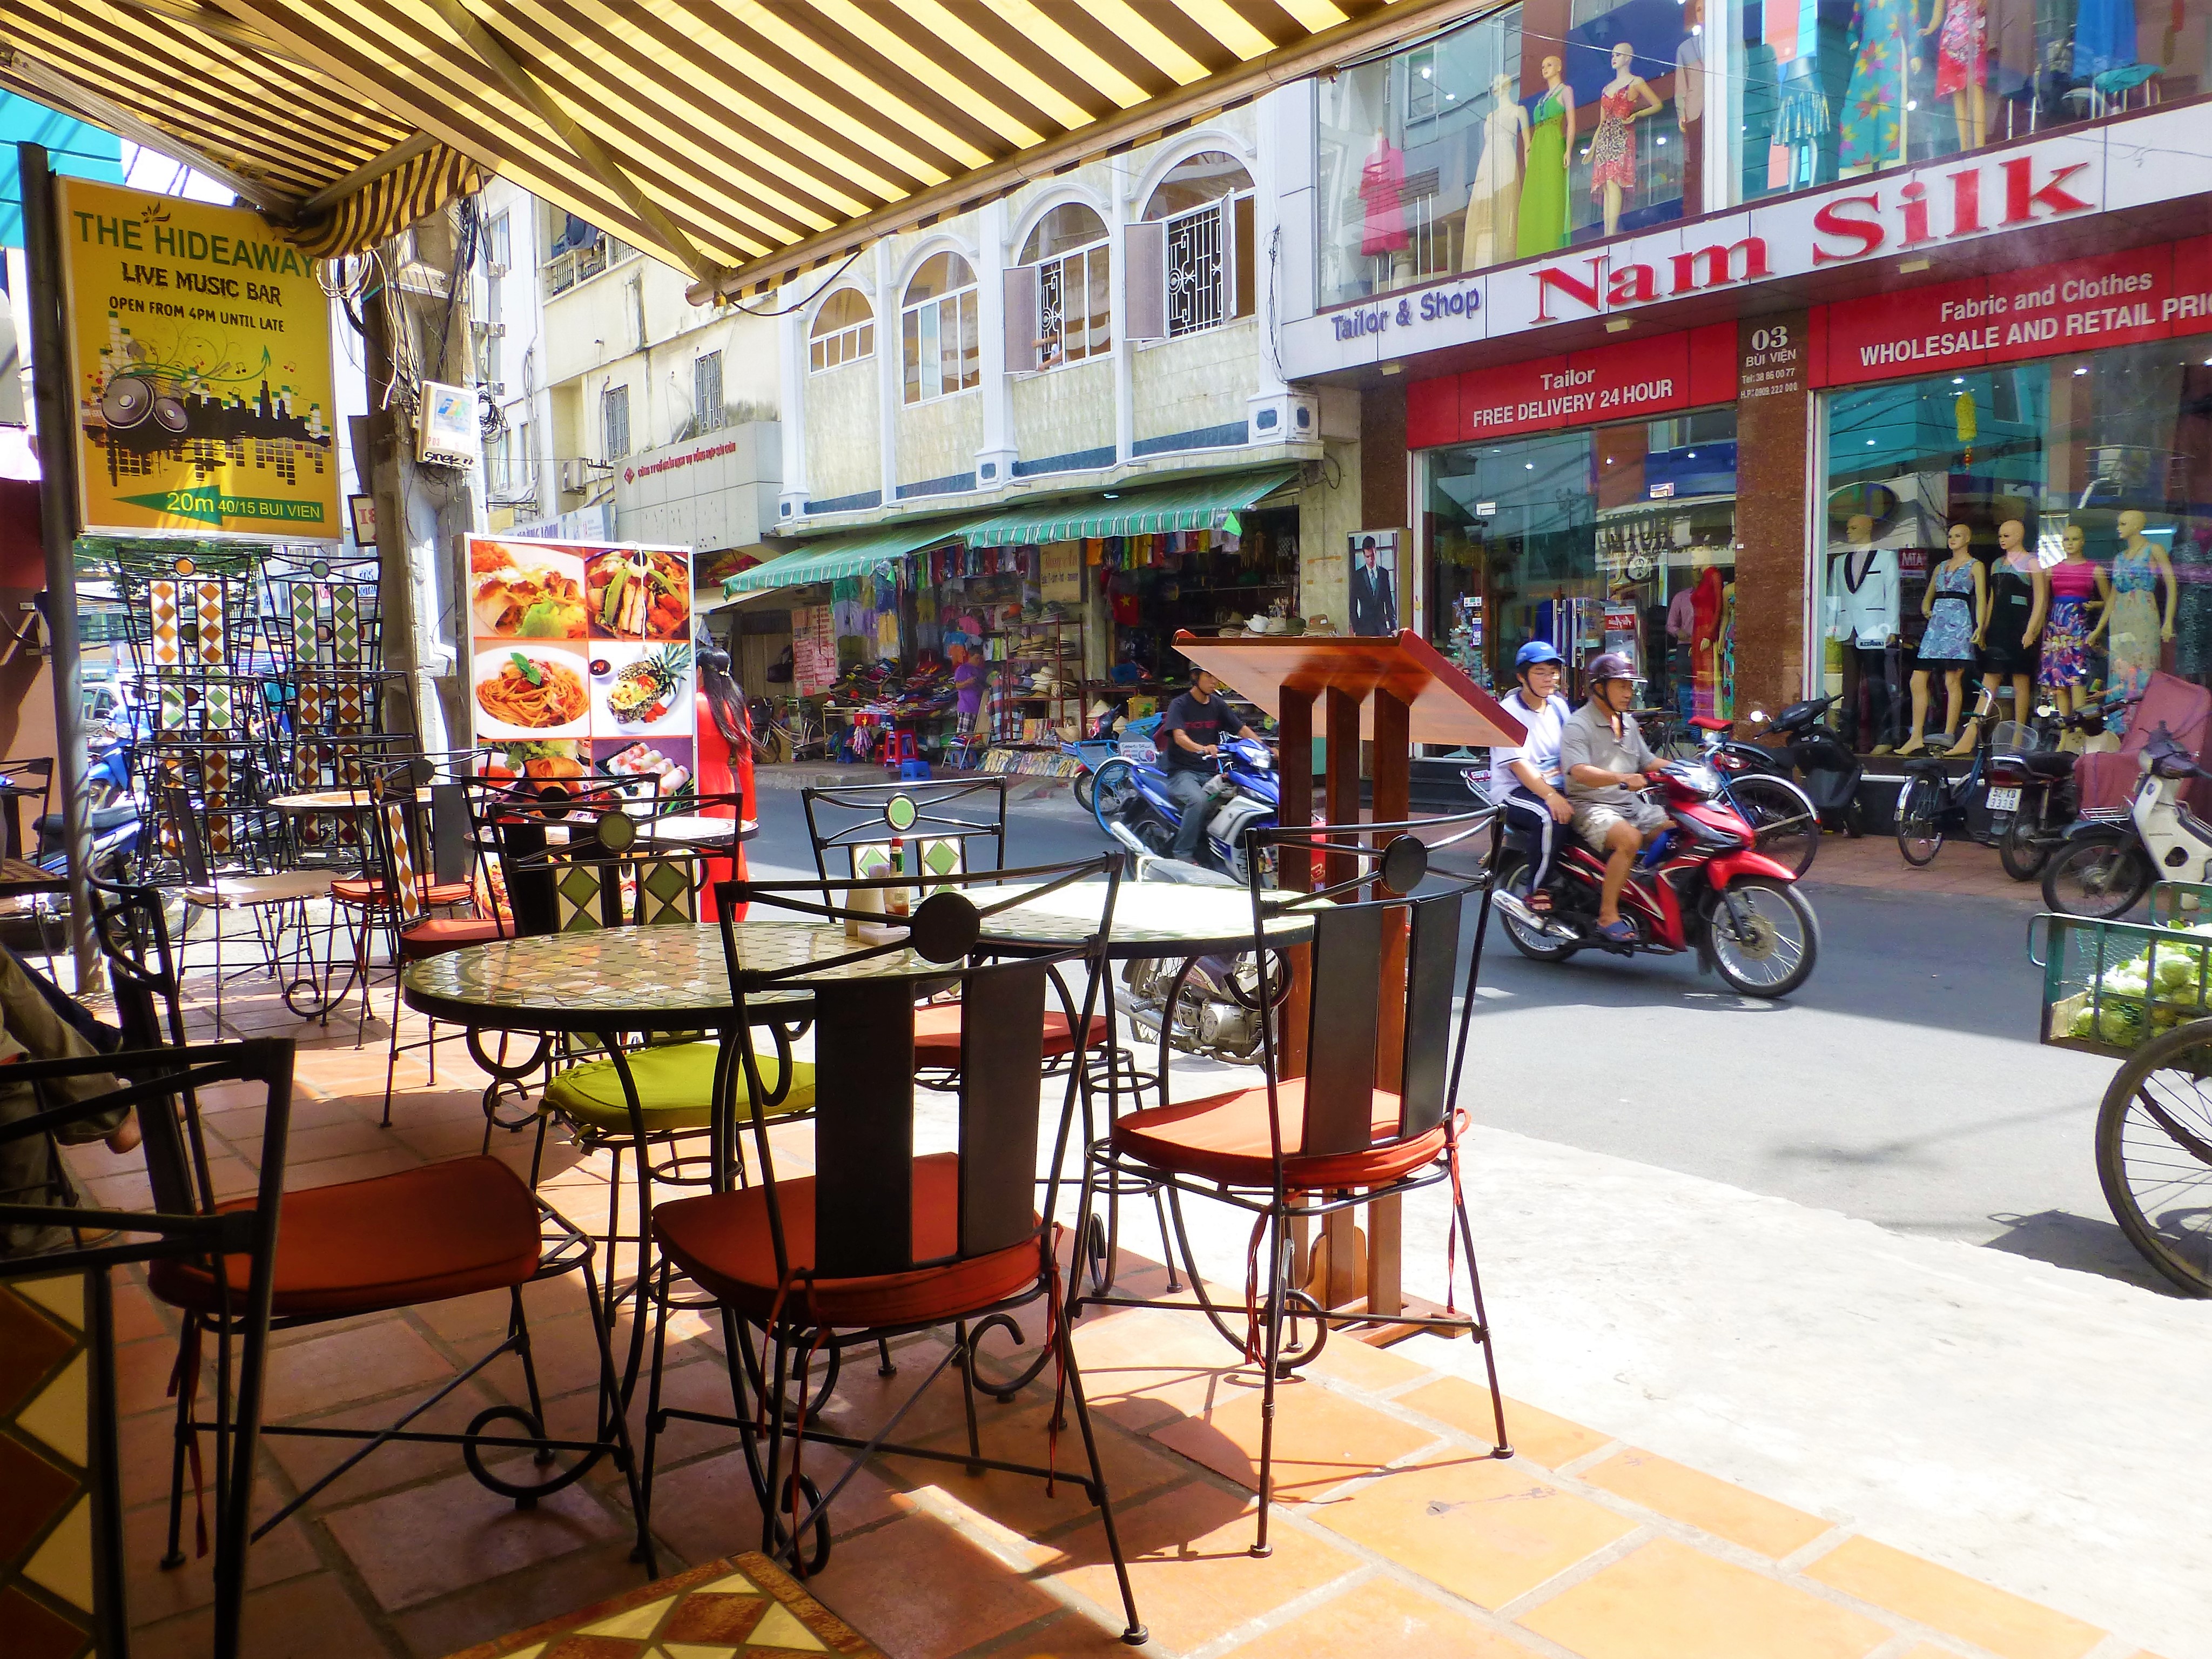 Tips for Saigon - Phan Ngu Lao Street (Backpackers area)